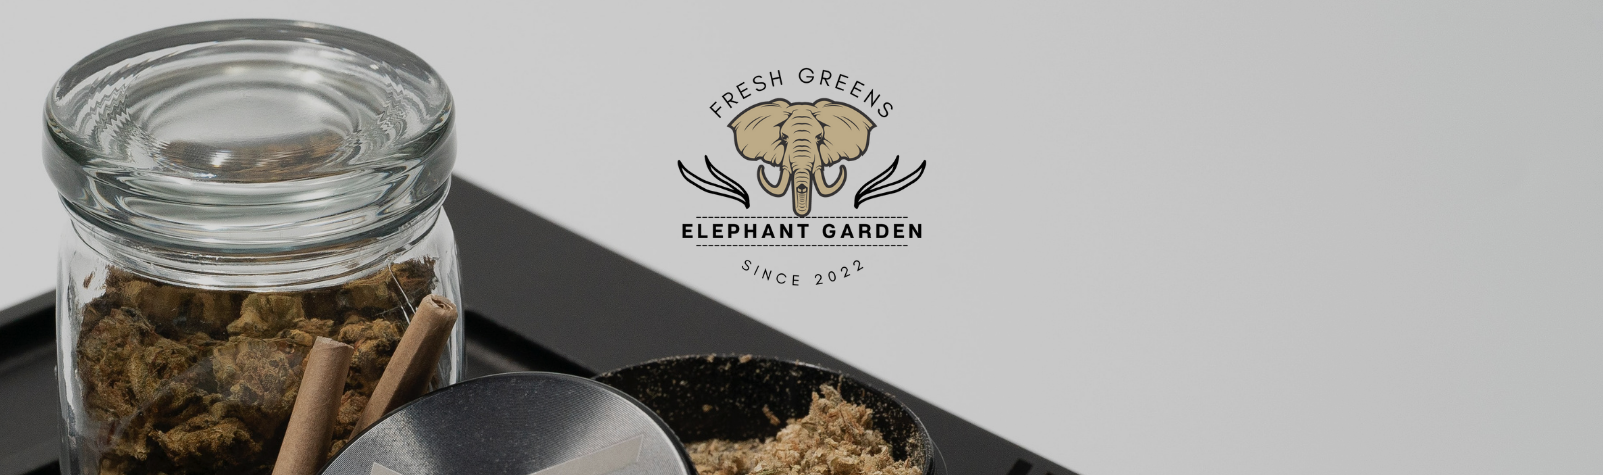 How to Order Elephant Garden